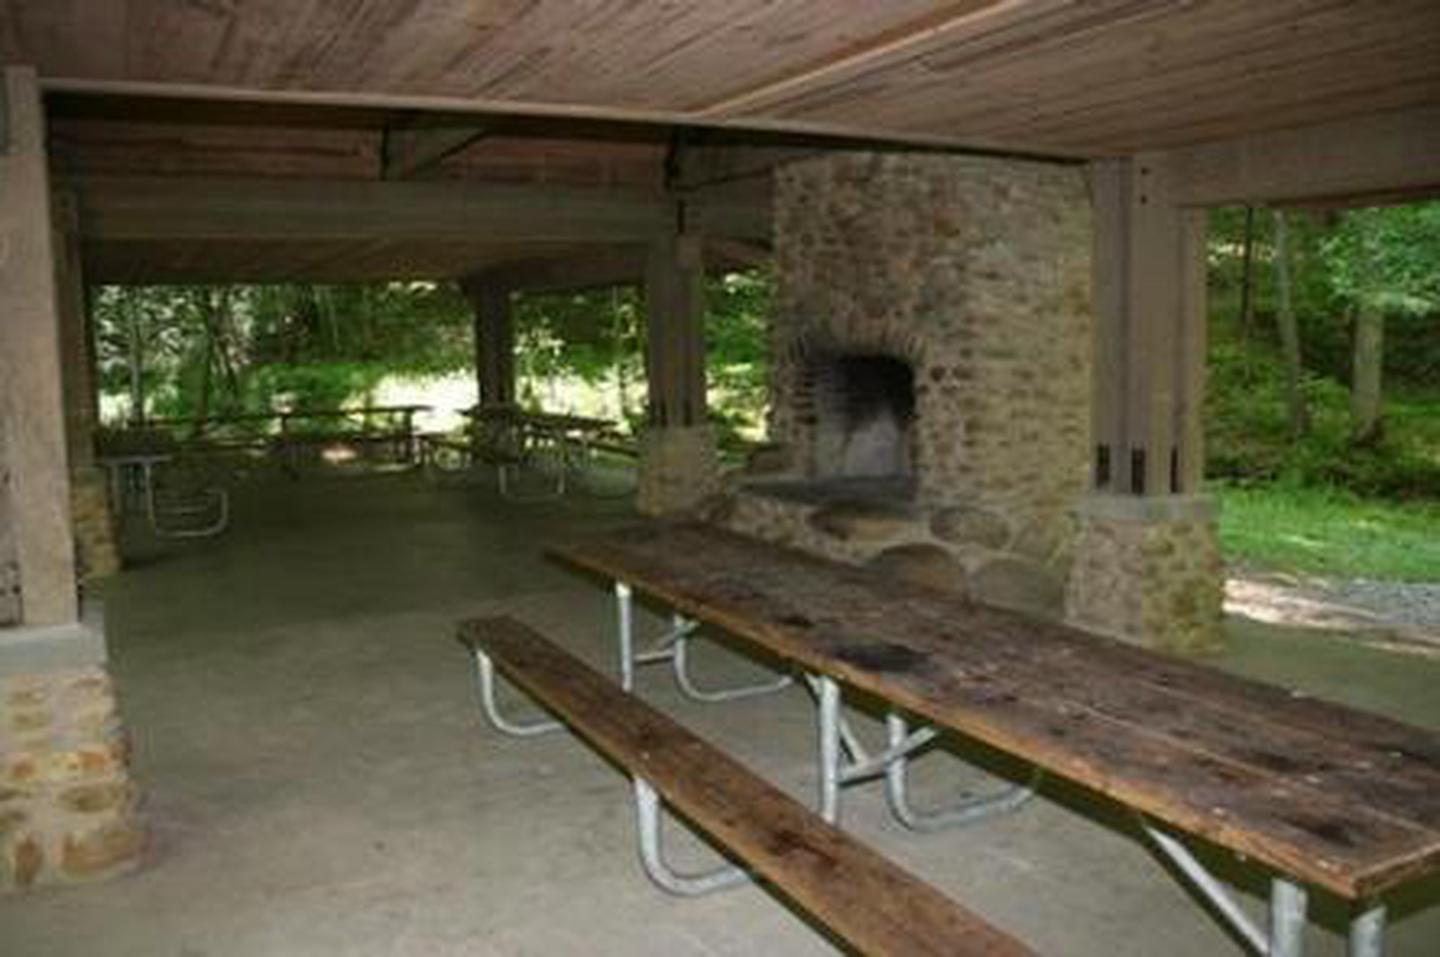 GREENBRIER PICNIC PAVILION Inside pavilion showing picnic tables and fireplace